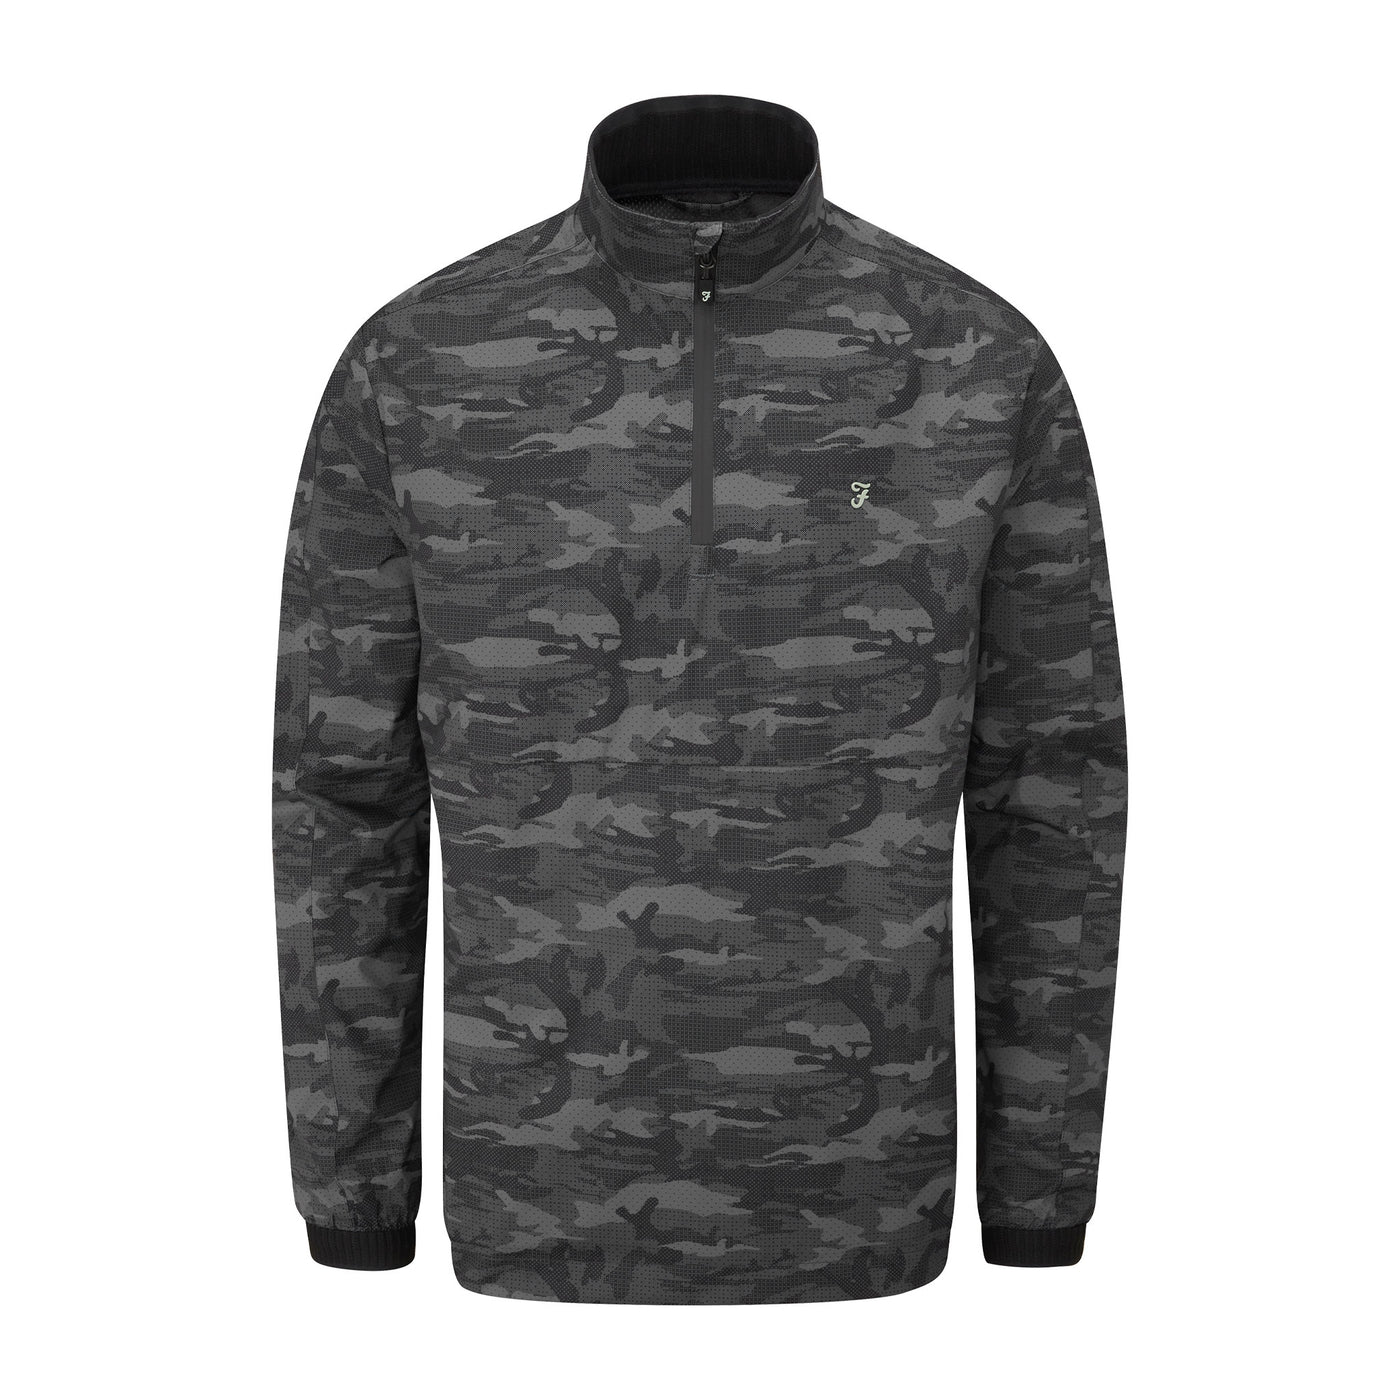 Parker Lightweight Showerproof Camouflage Print Jacket.